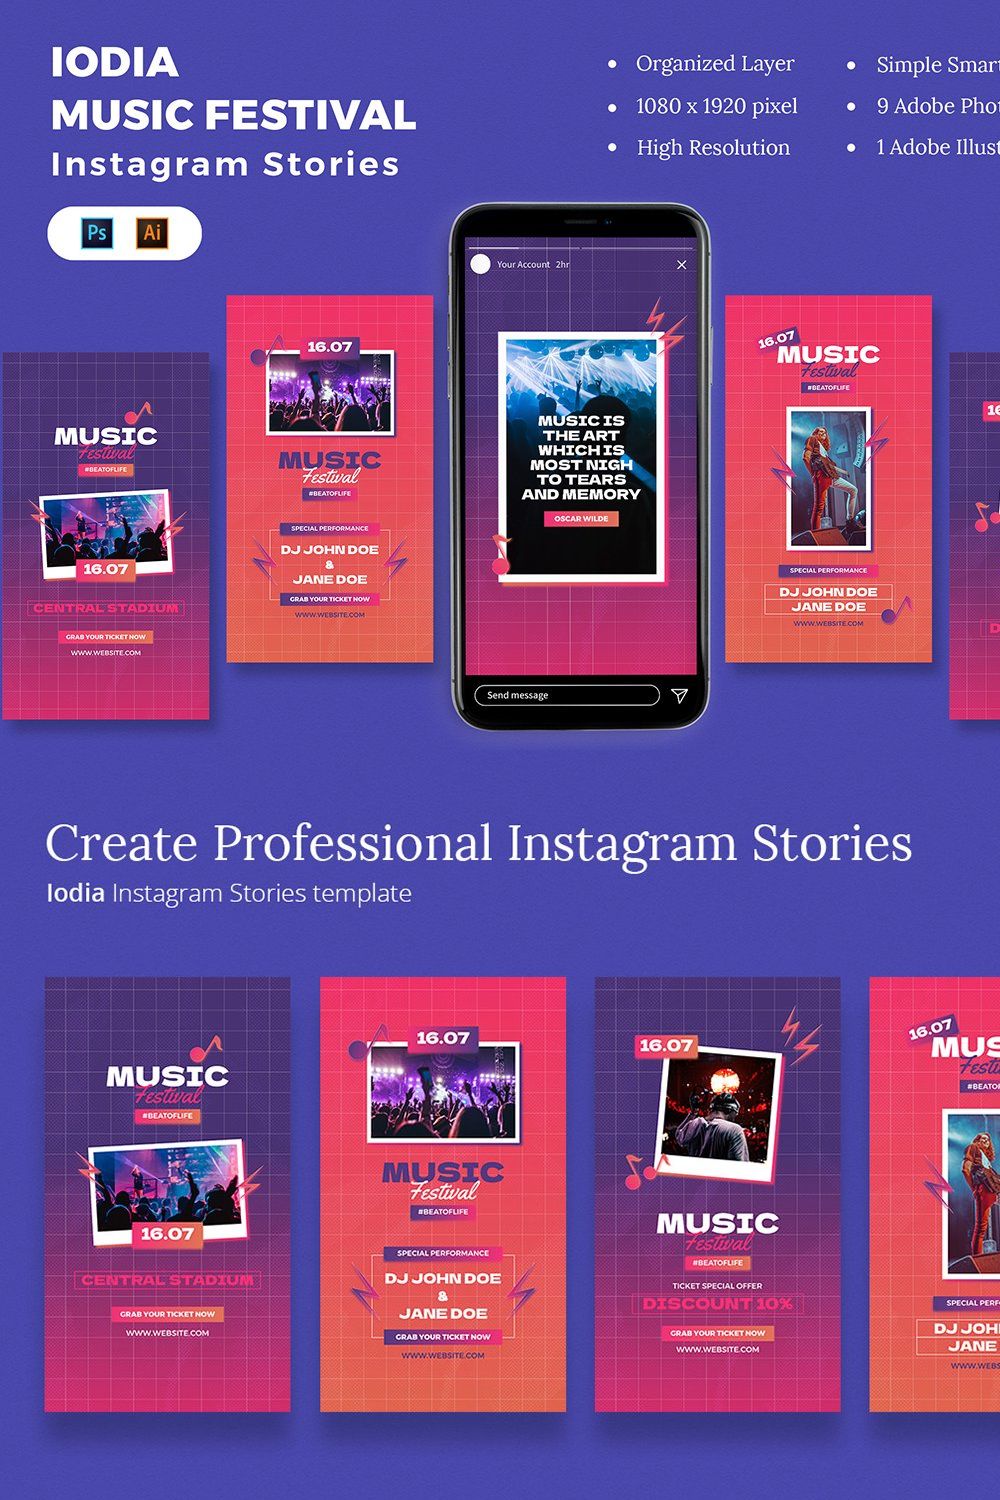 Music Festival Instagram Stories pinterest preview image.